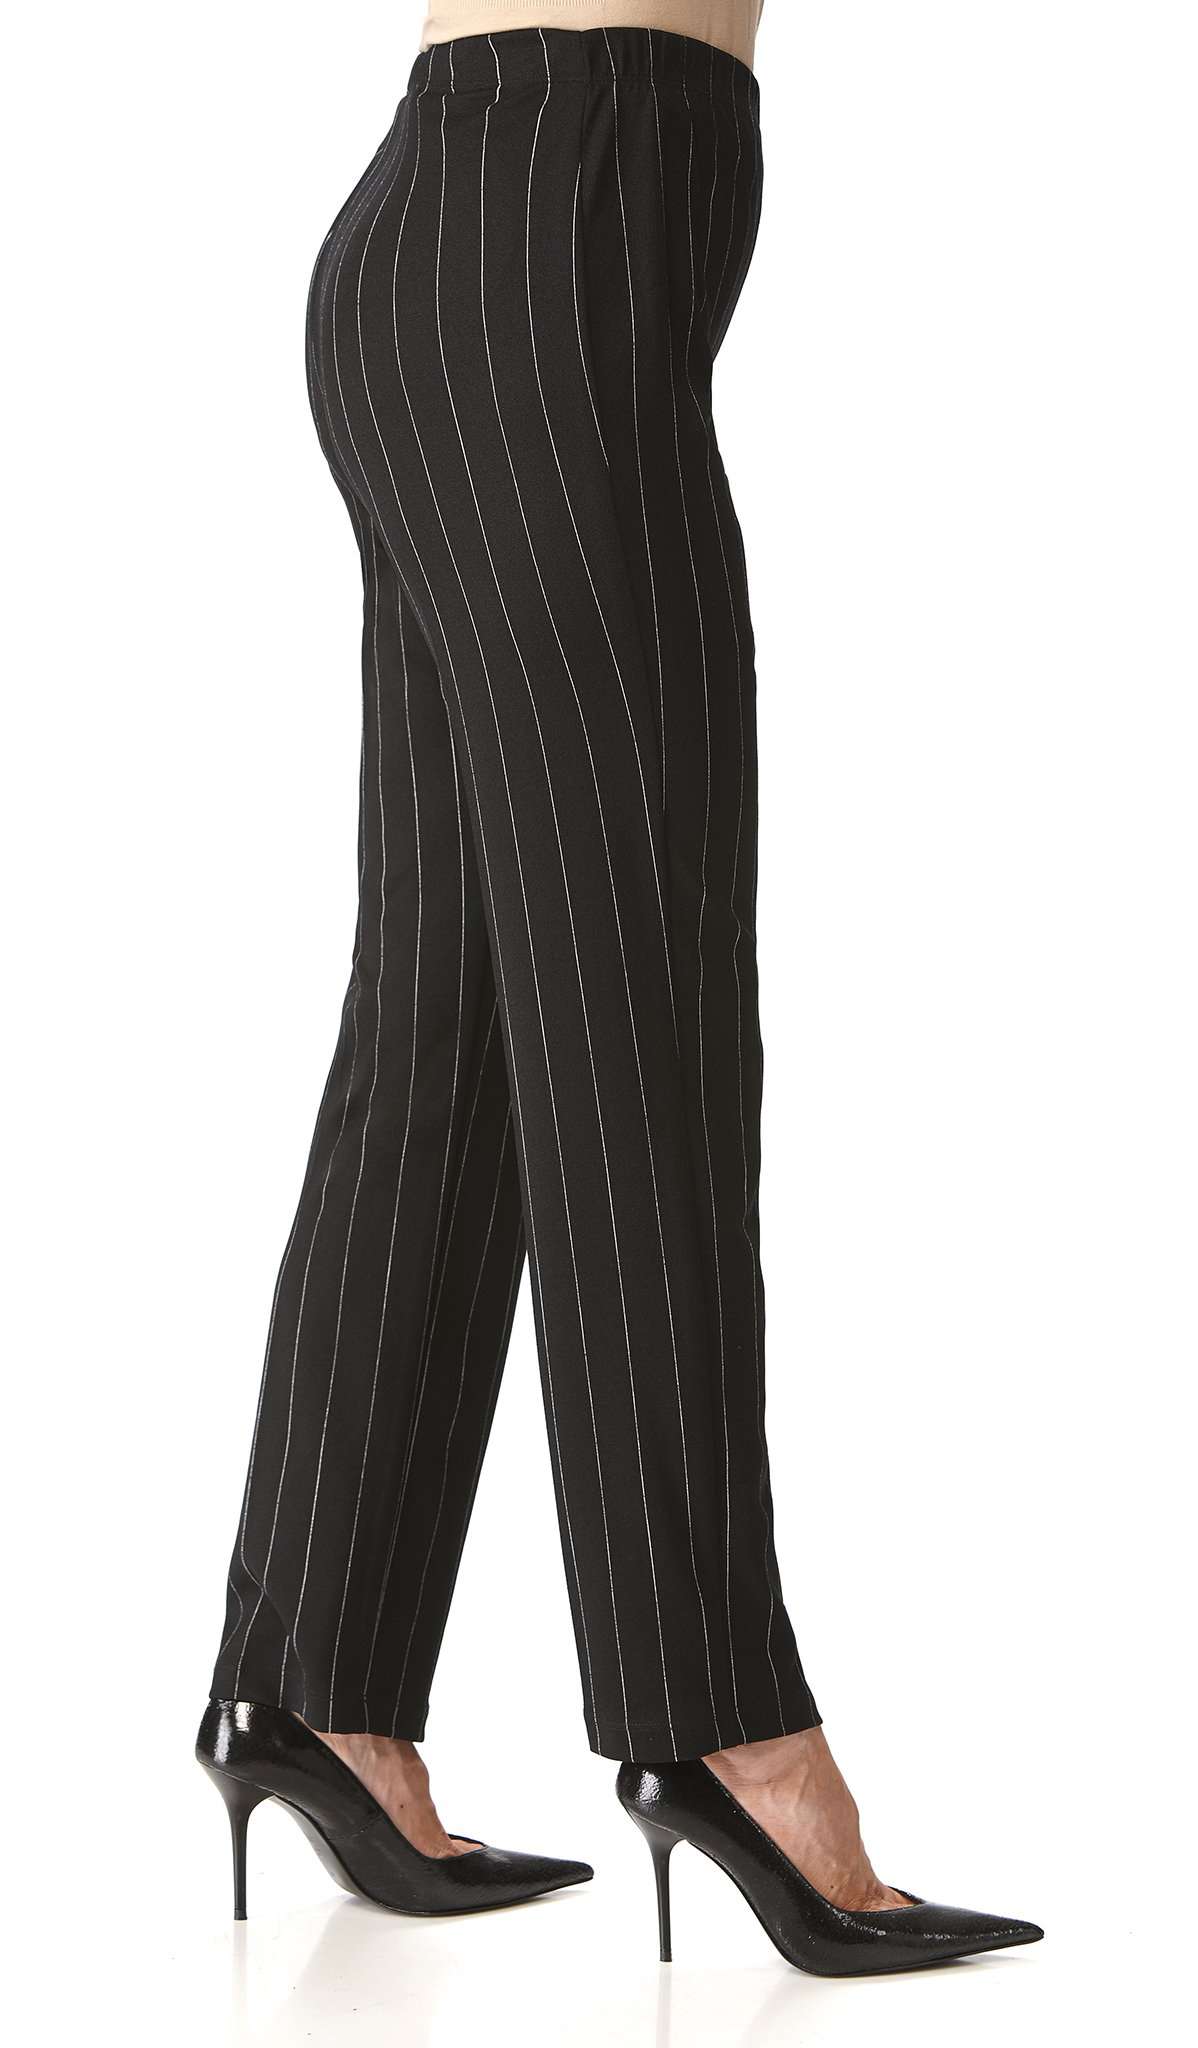 Women's Black Thin Pinstripe Pants, On Sale